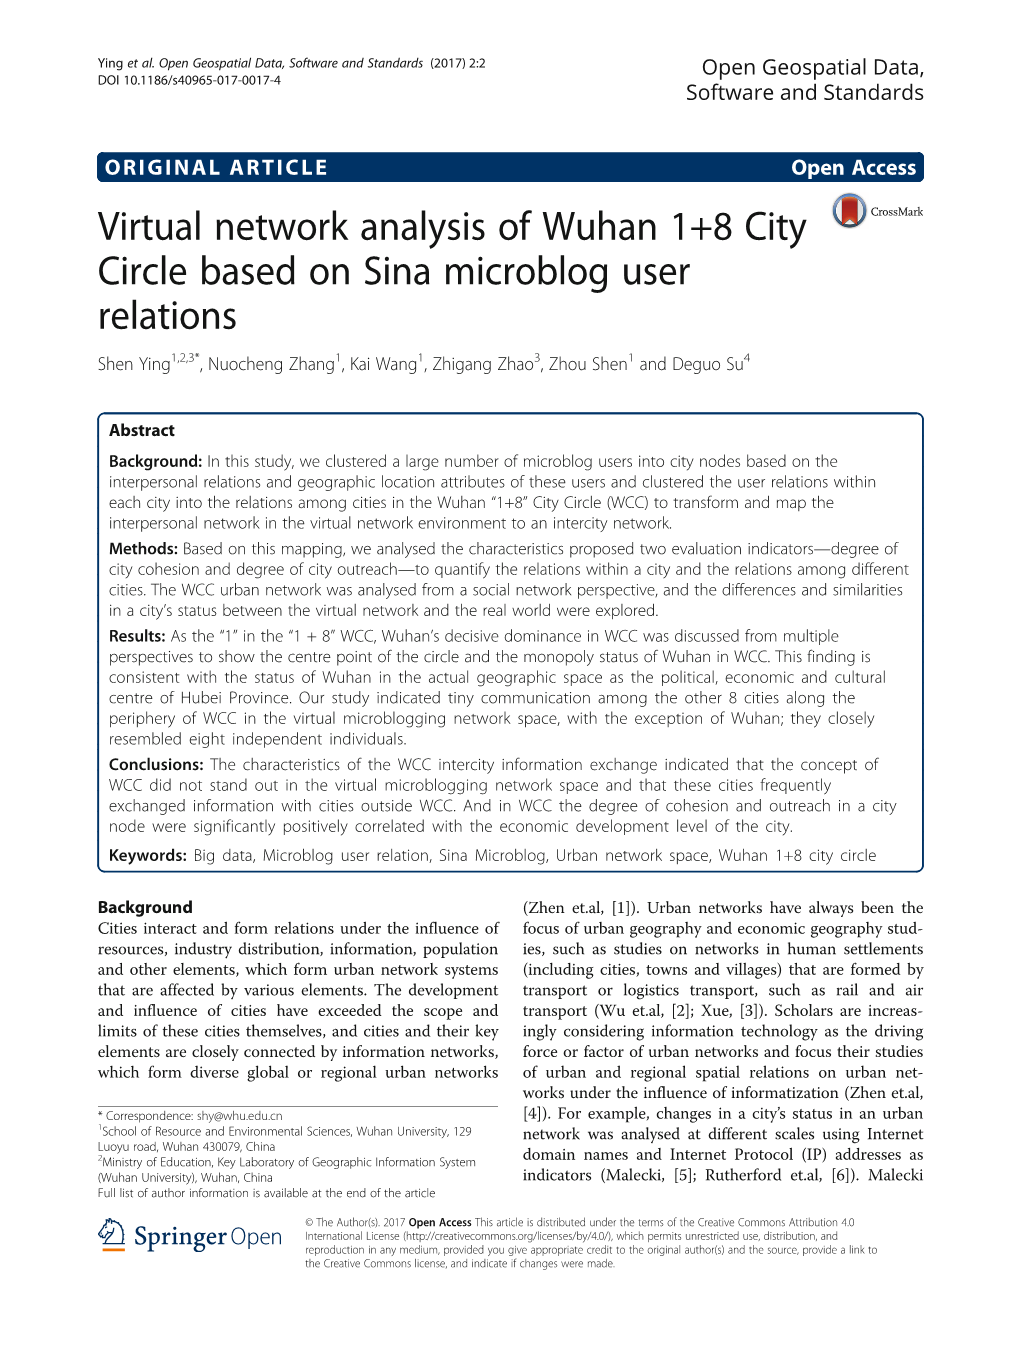 Virtual Network Analysis of Wuhan 1+8 City Circle Based on Sina